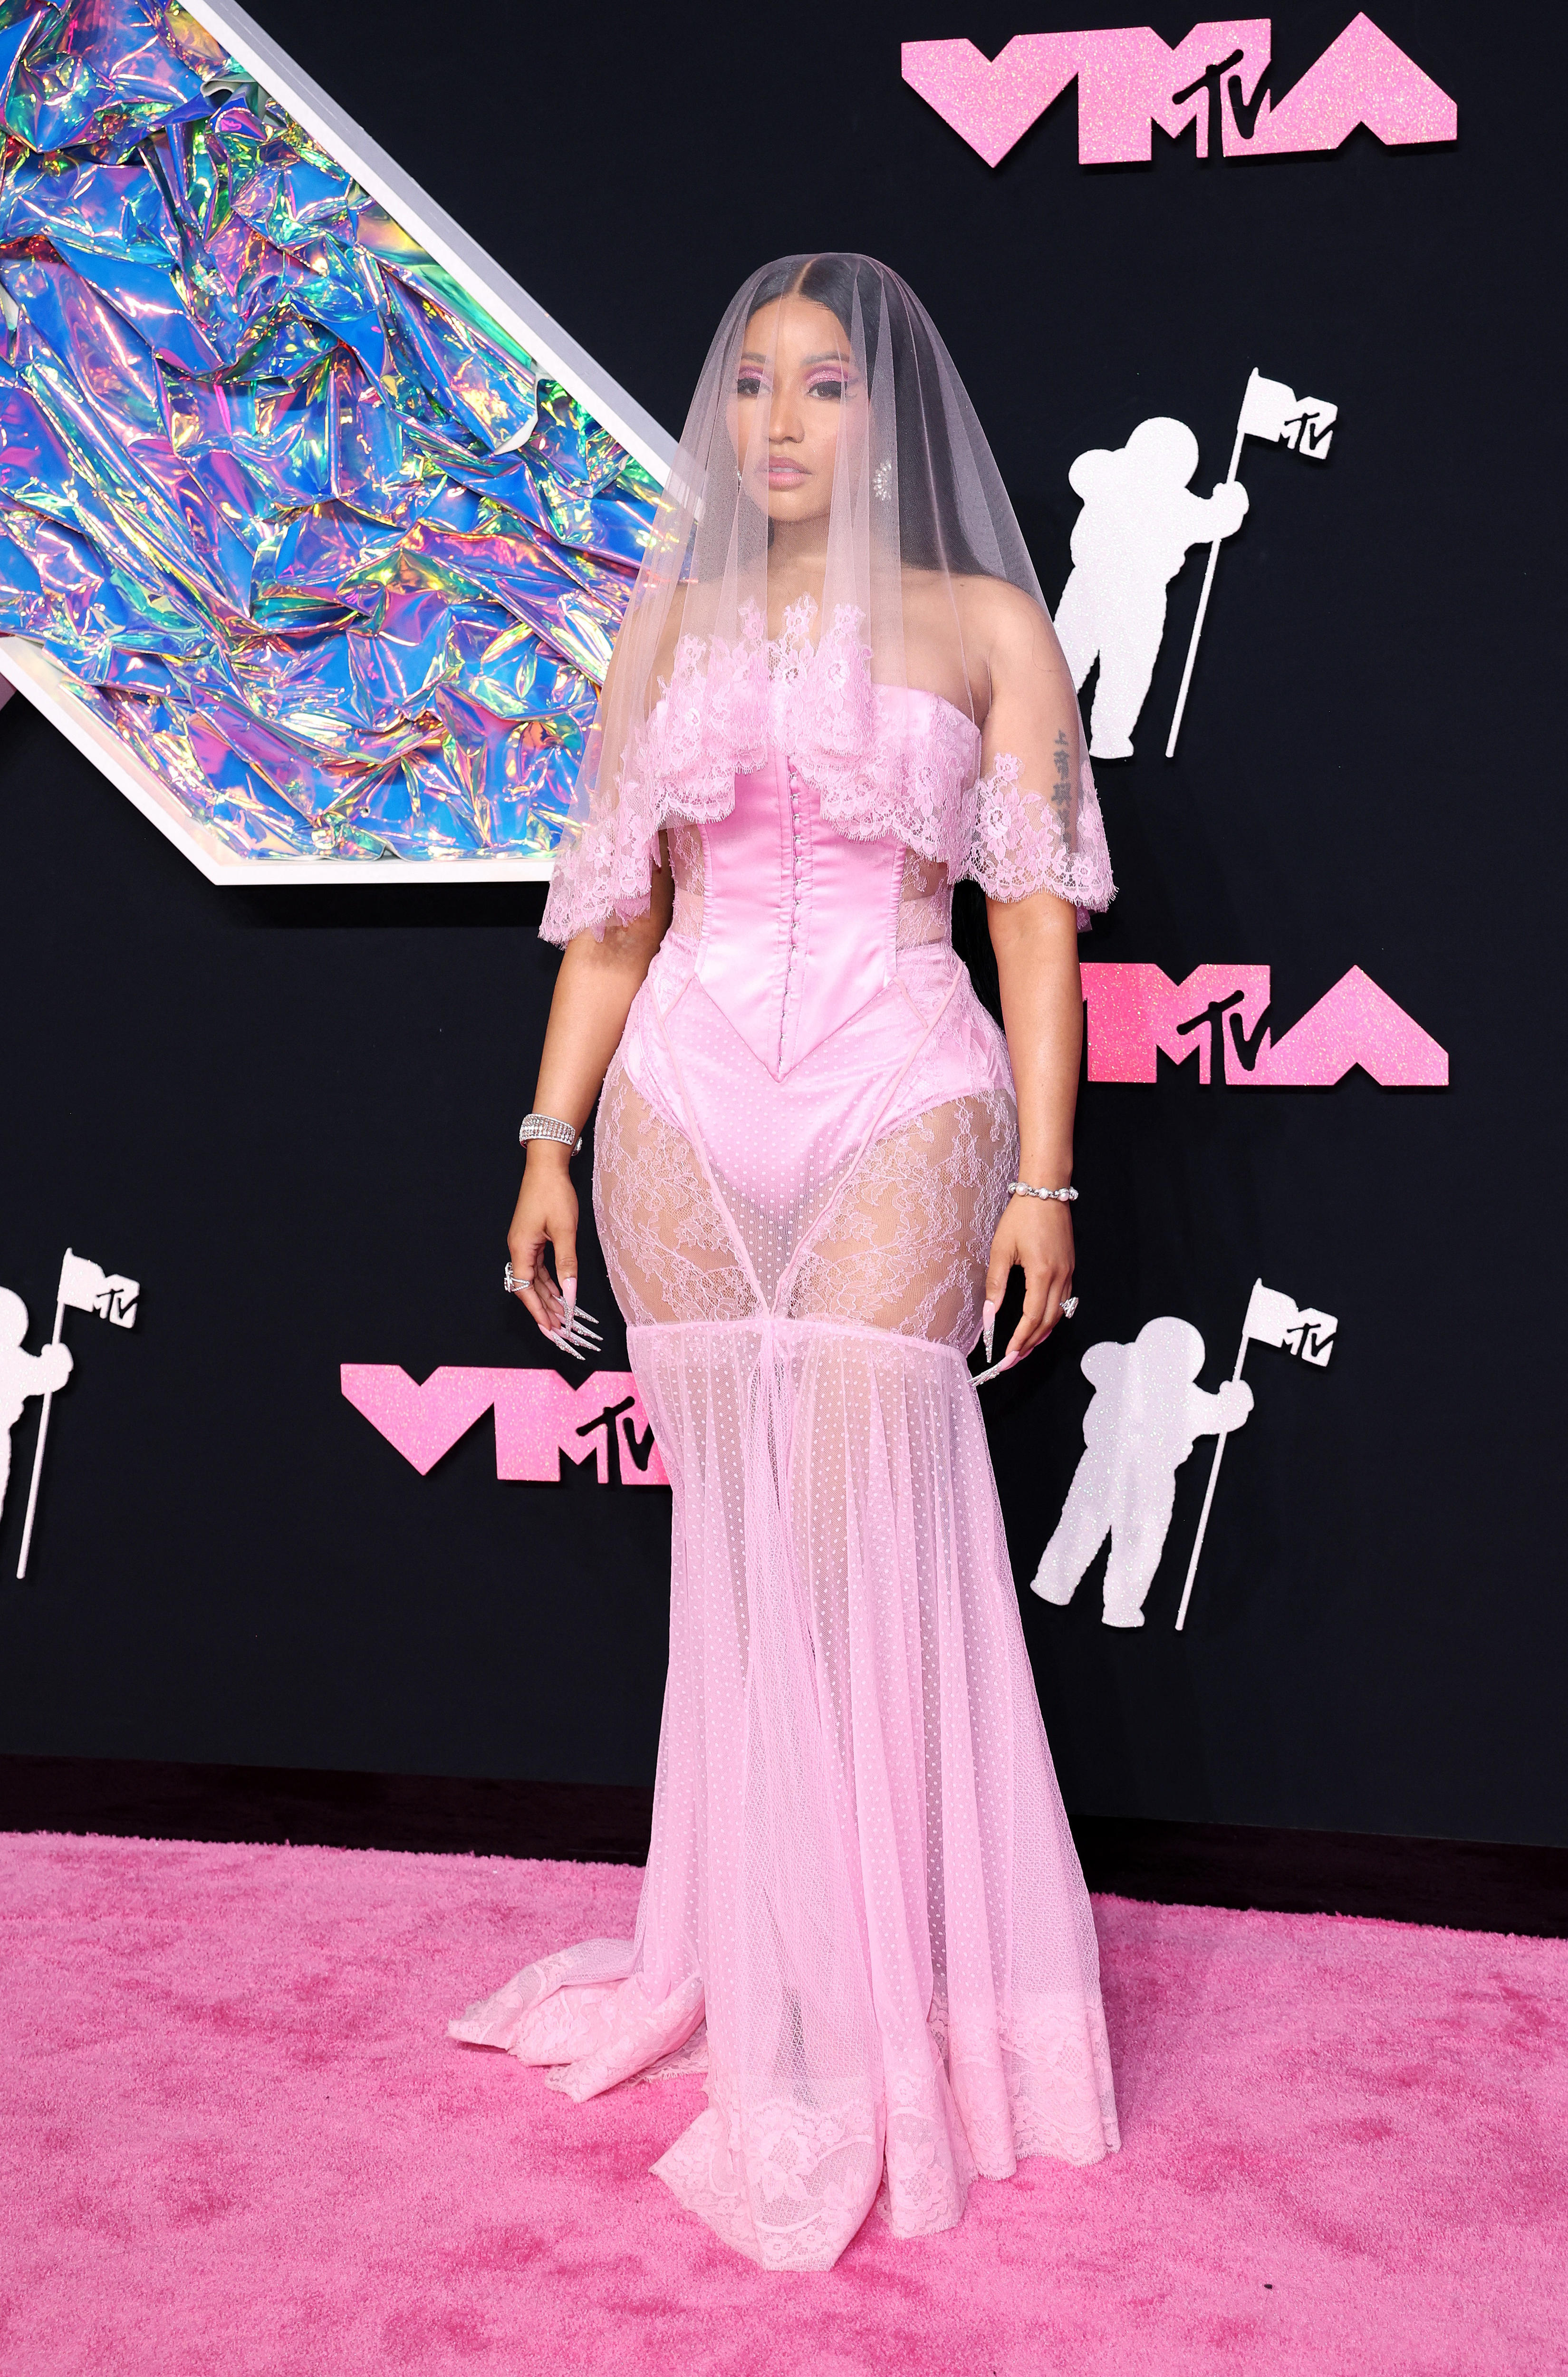 Nicki Minaj is wearing a pink veil with a pink laced dress